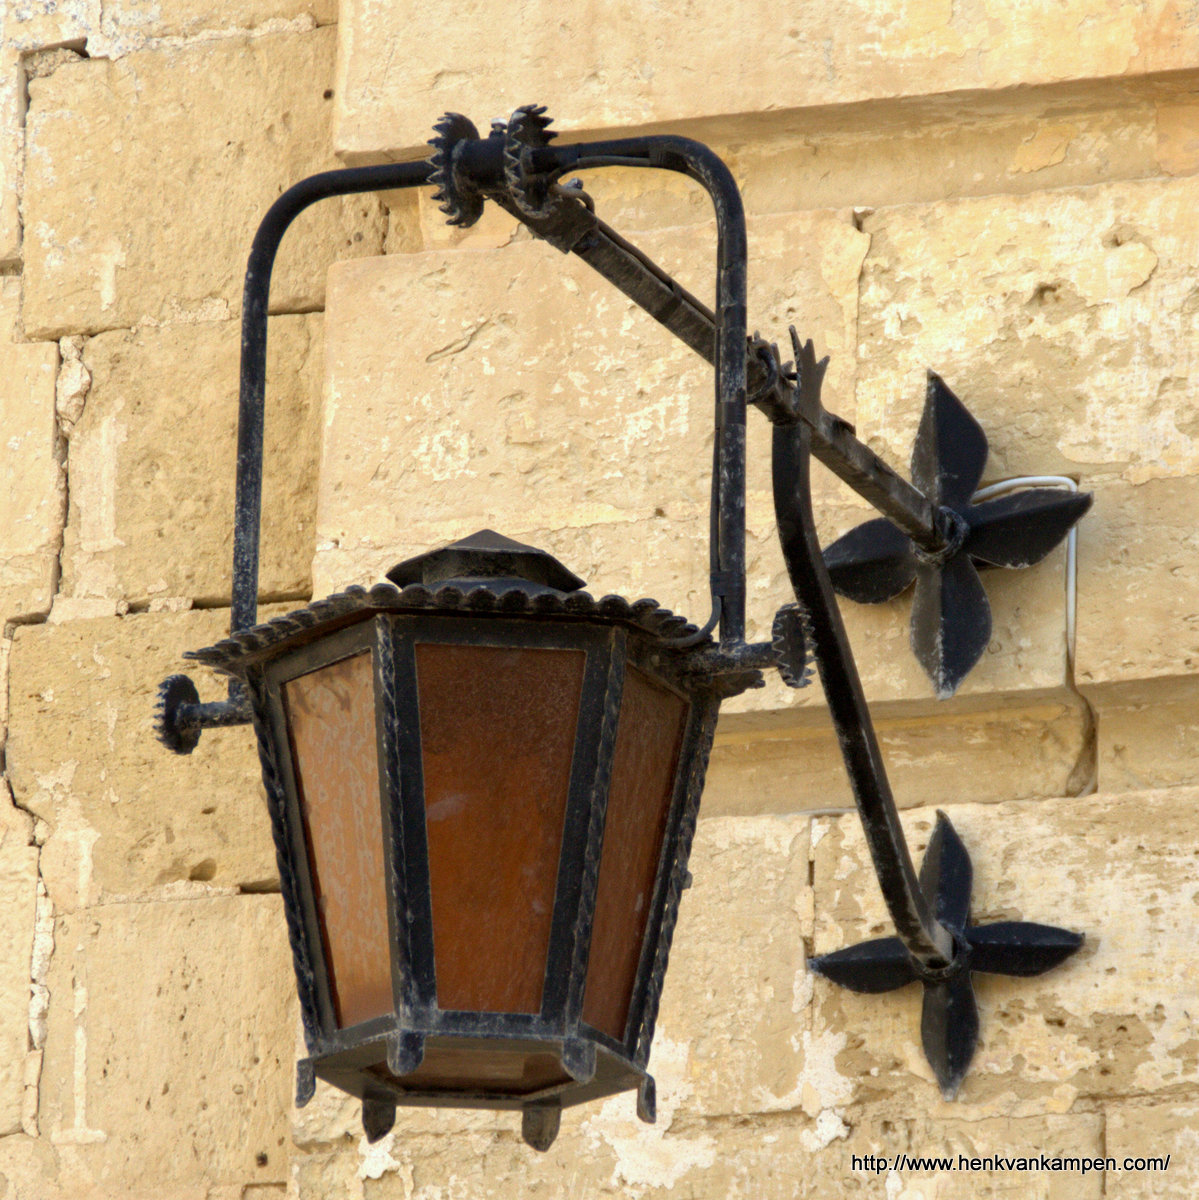 A lantern in the streets of Mdina, Malta